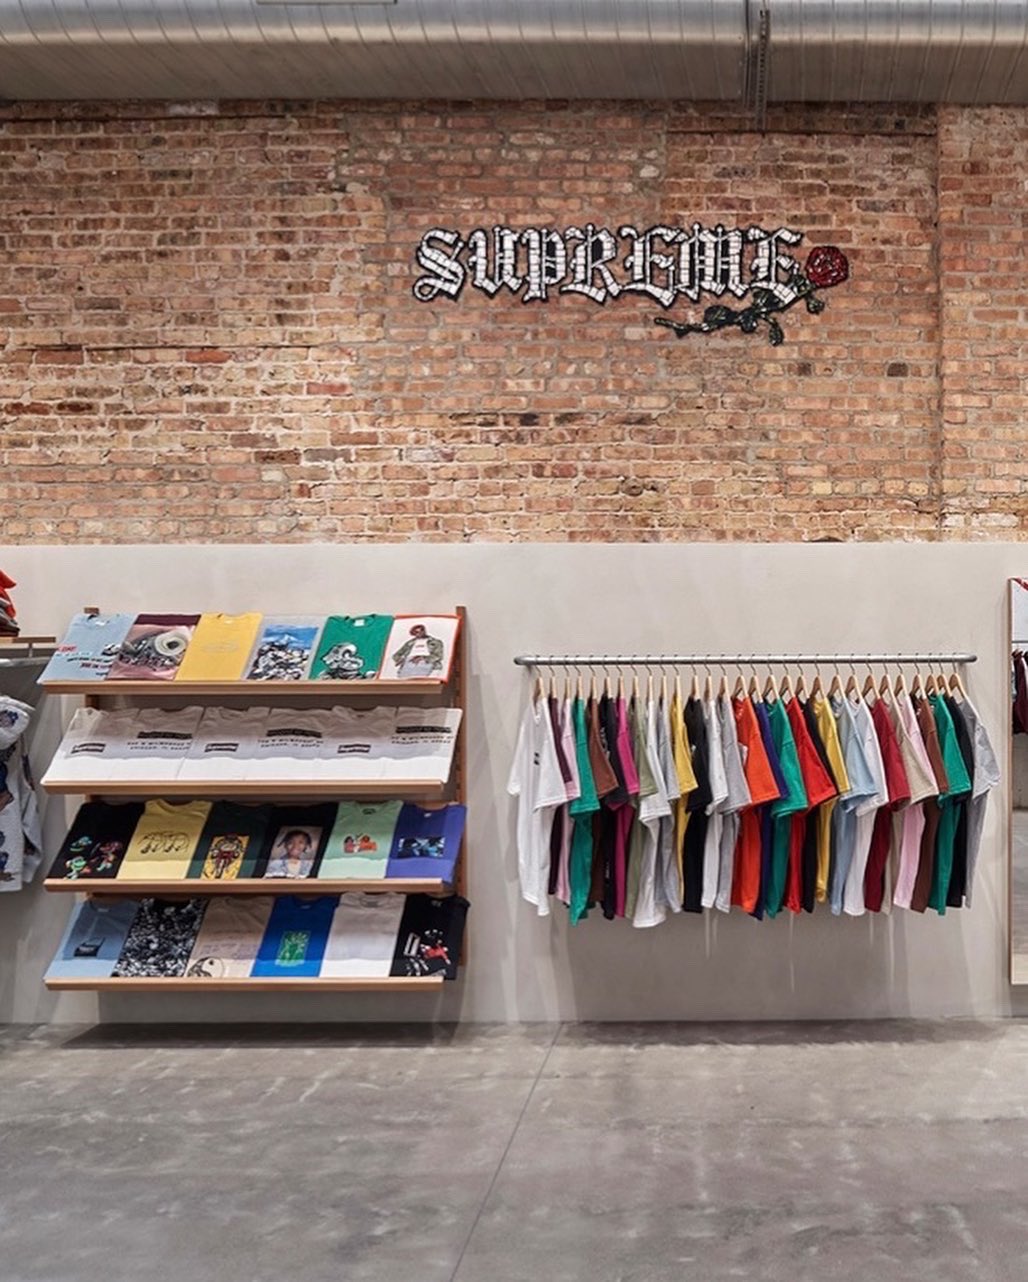 SUPREMEの新店「Chicago」が11/10にオープン予定 (シュプリーム シカゴ)